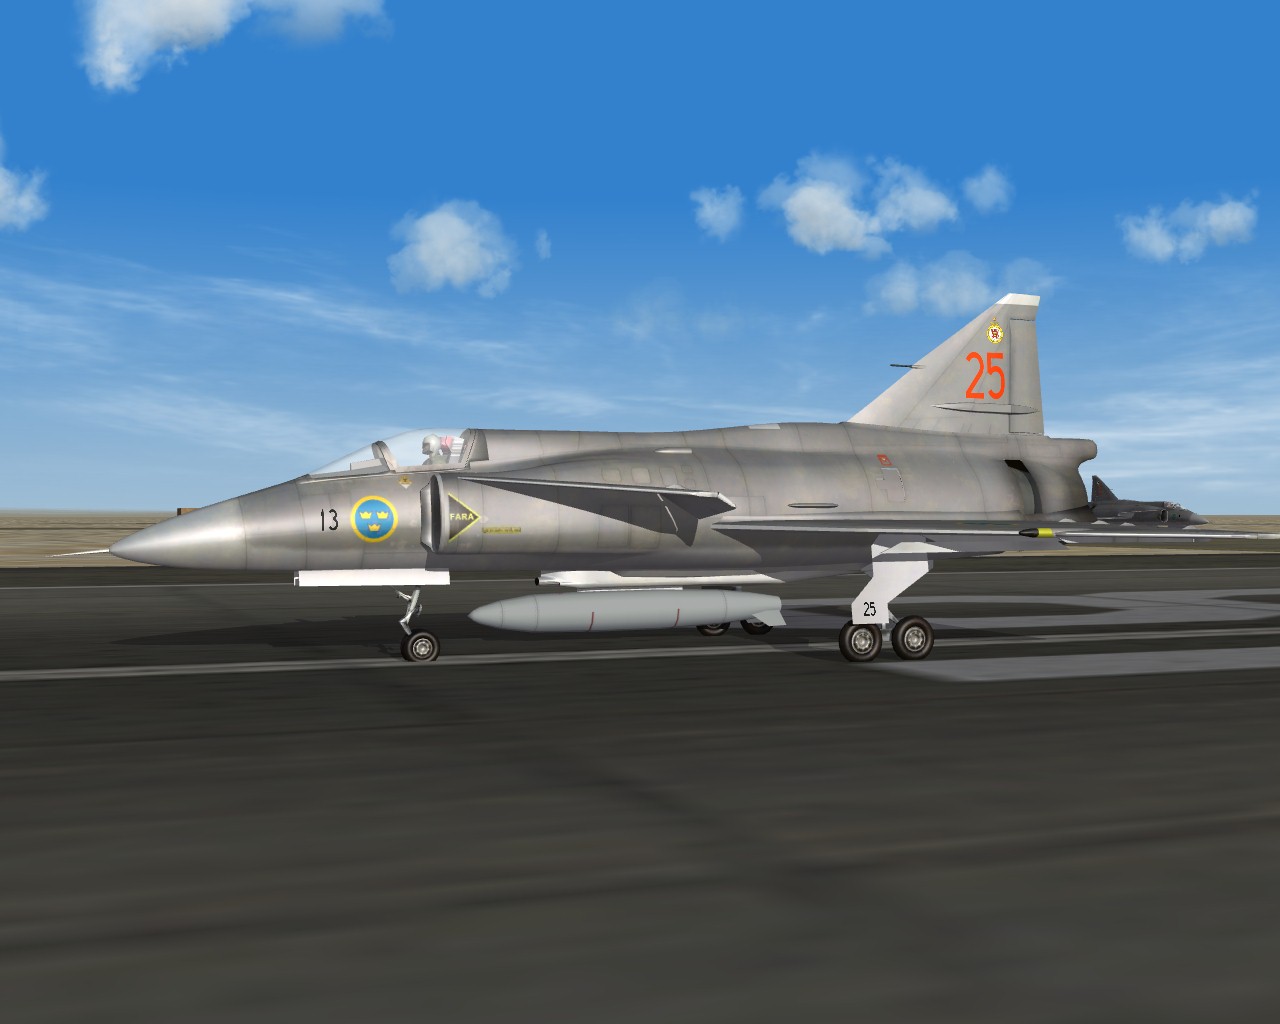 JA-37 drop fuel tank